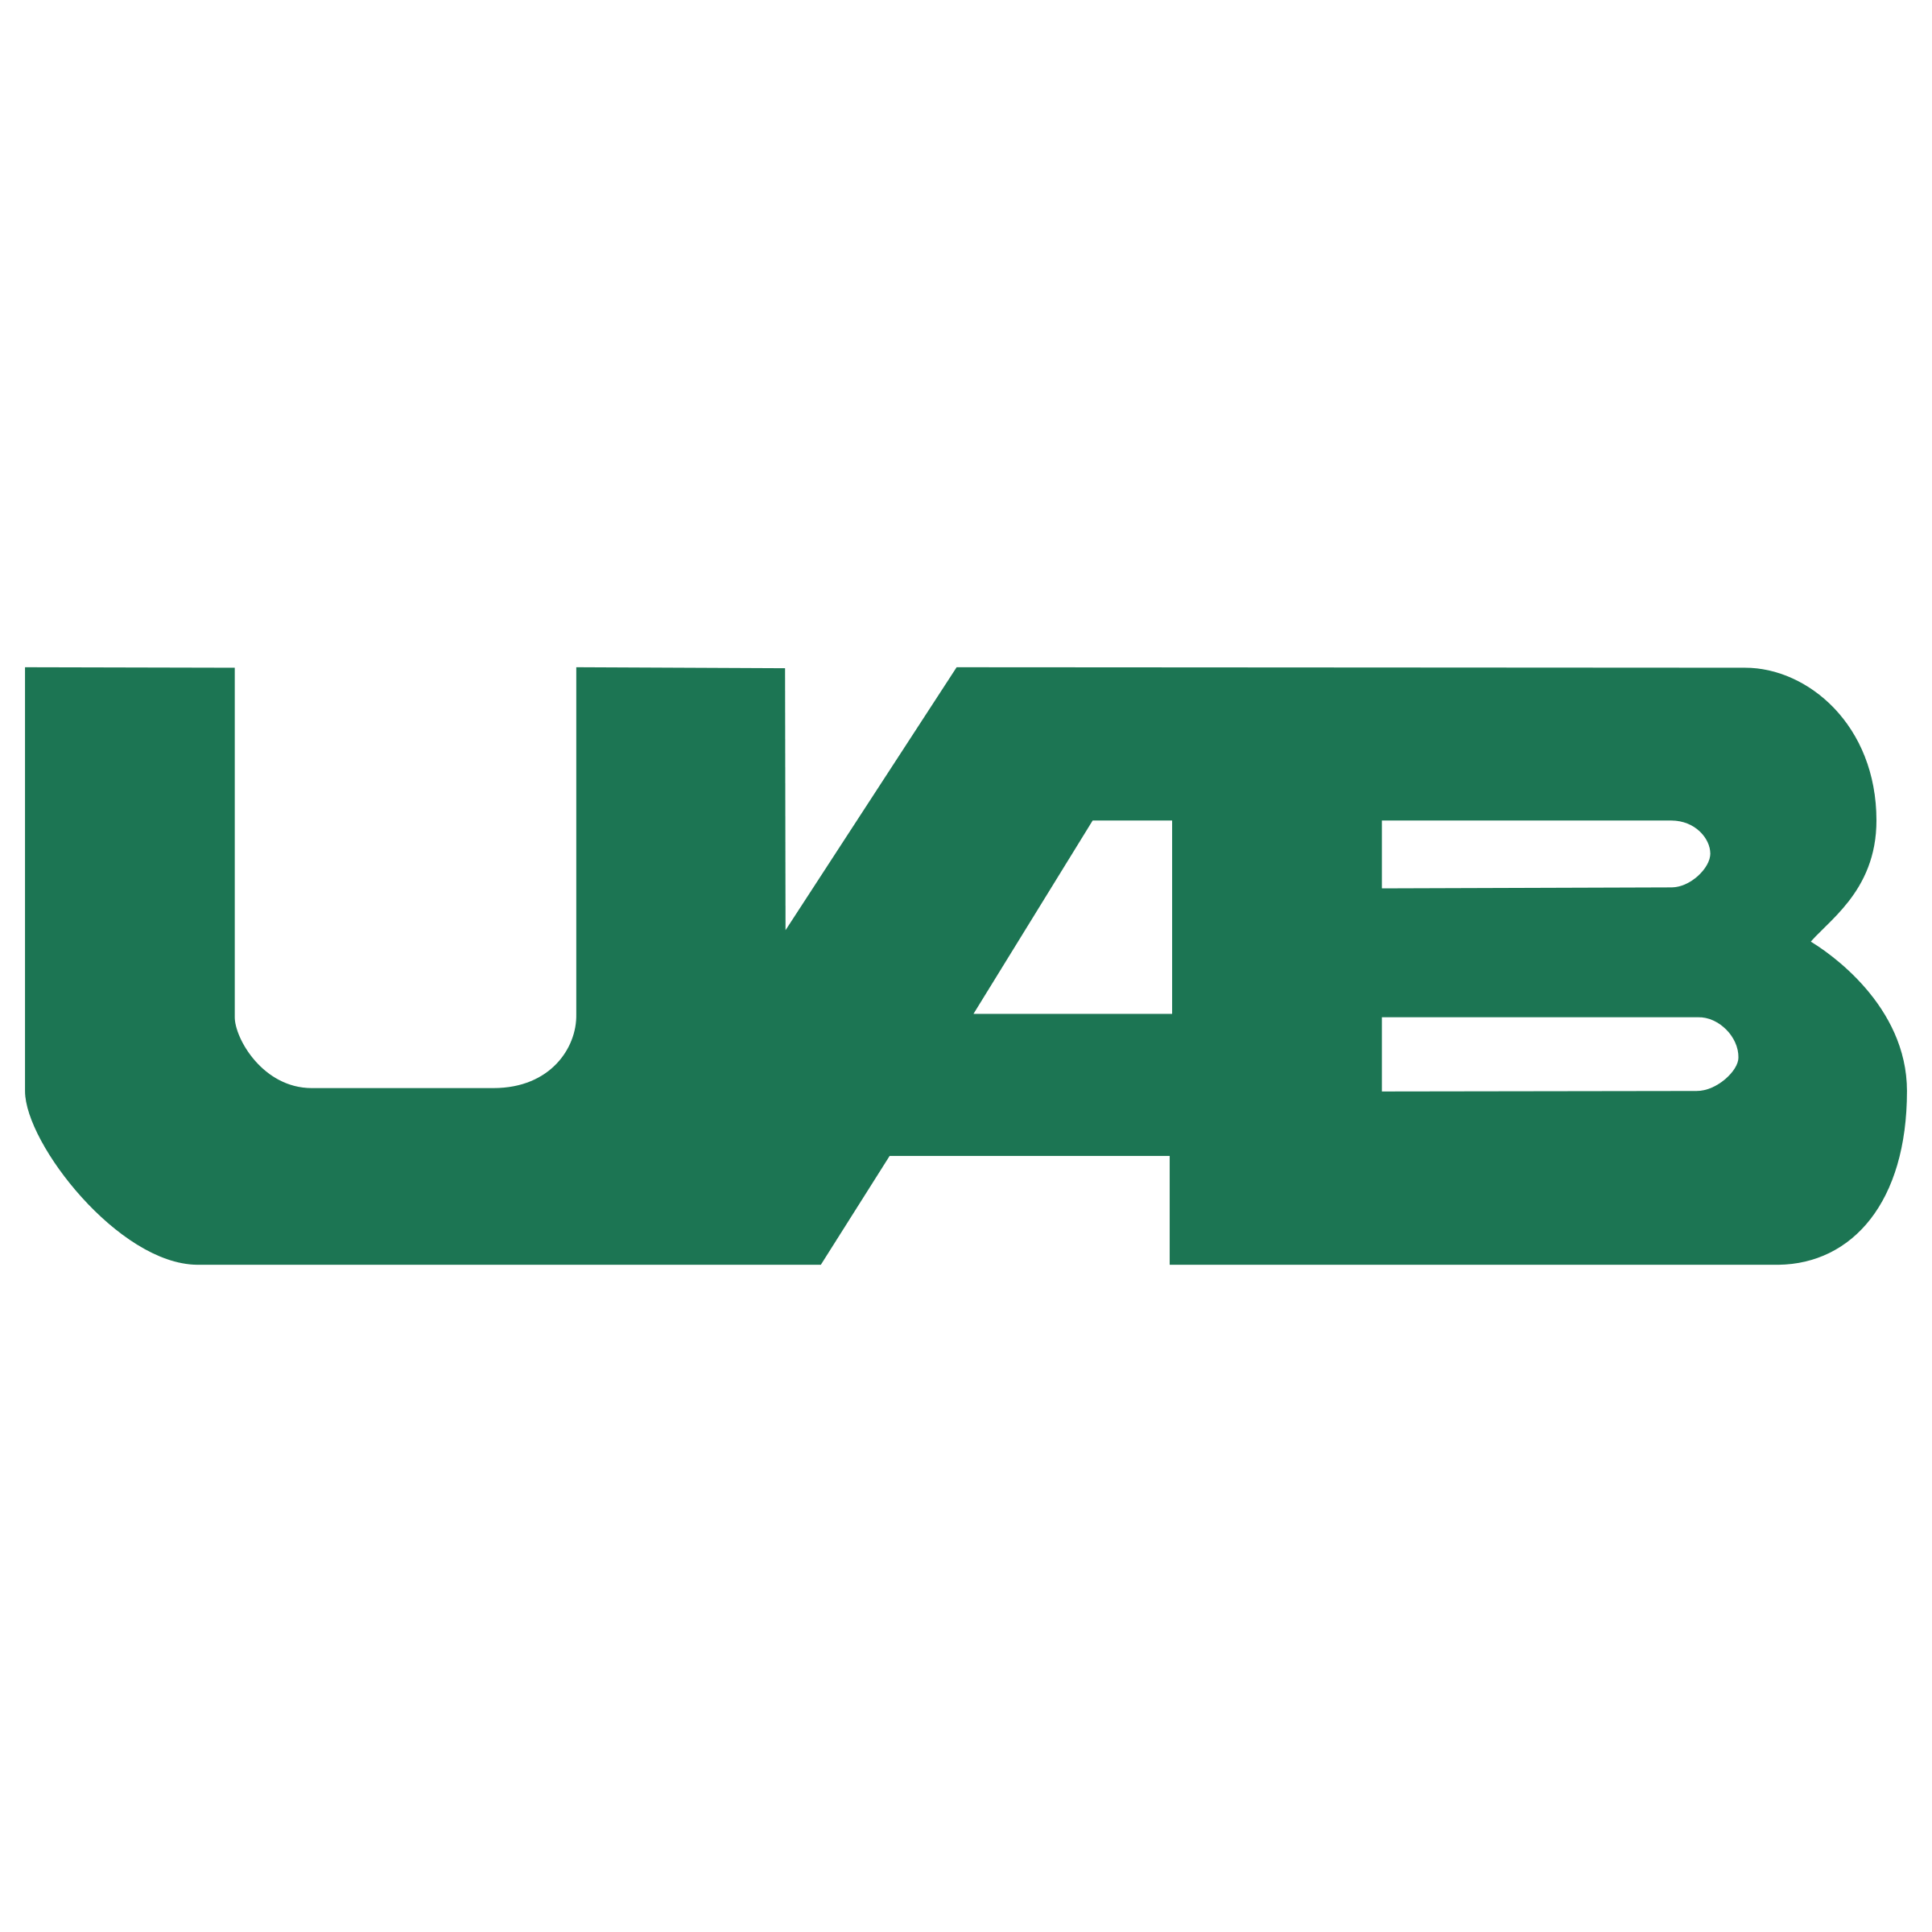 UAB Logo - UAB Logo PNG Transparent & SVG Vector - Freebie Supply